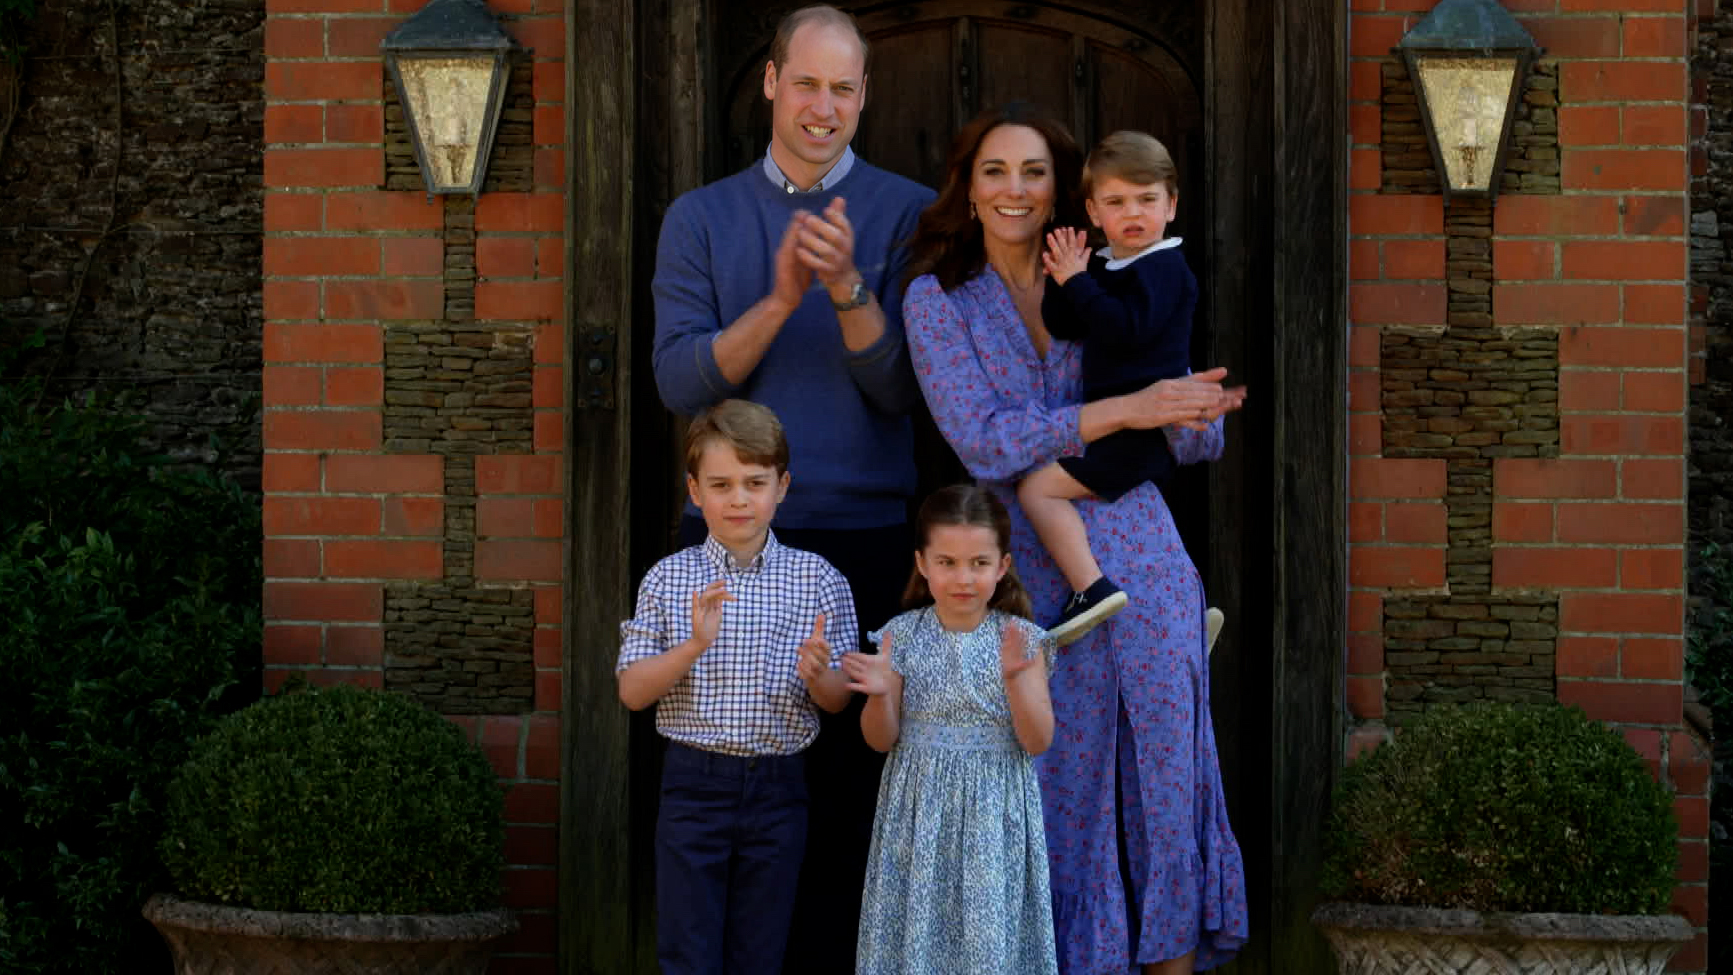 Prince William, Kate Middleton, Prince George, Princess Charlotte, and Prince Louis on April 23, 2020